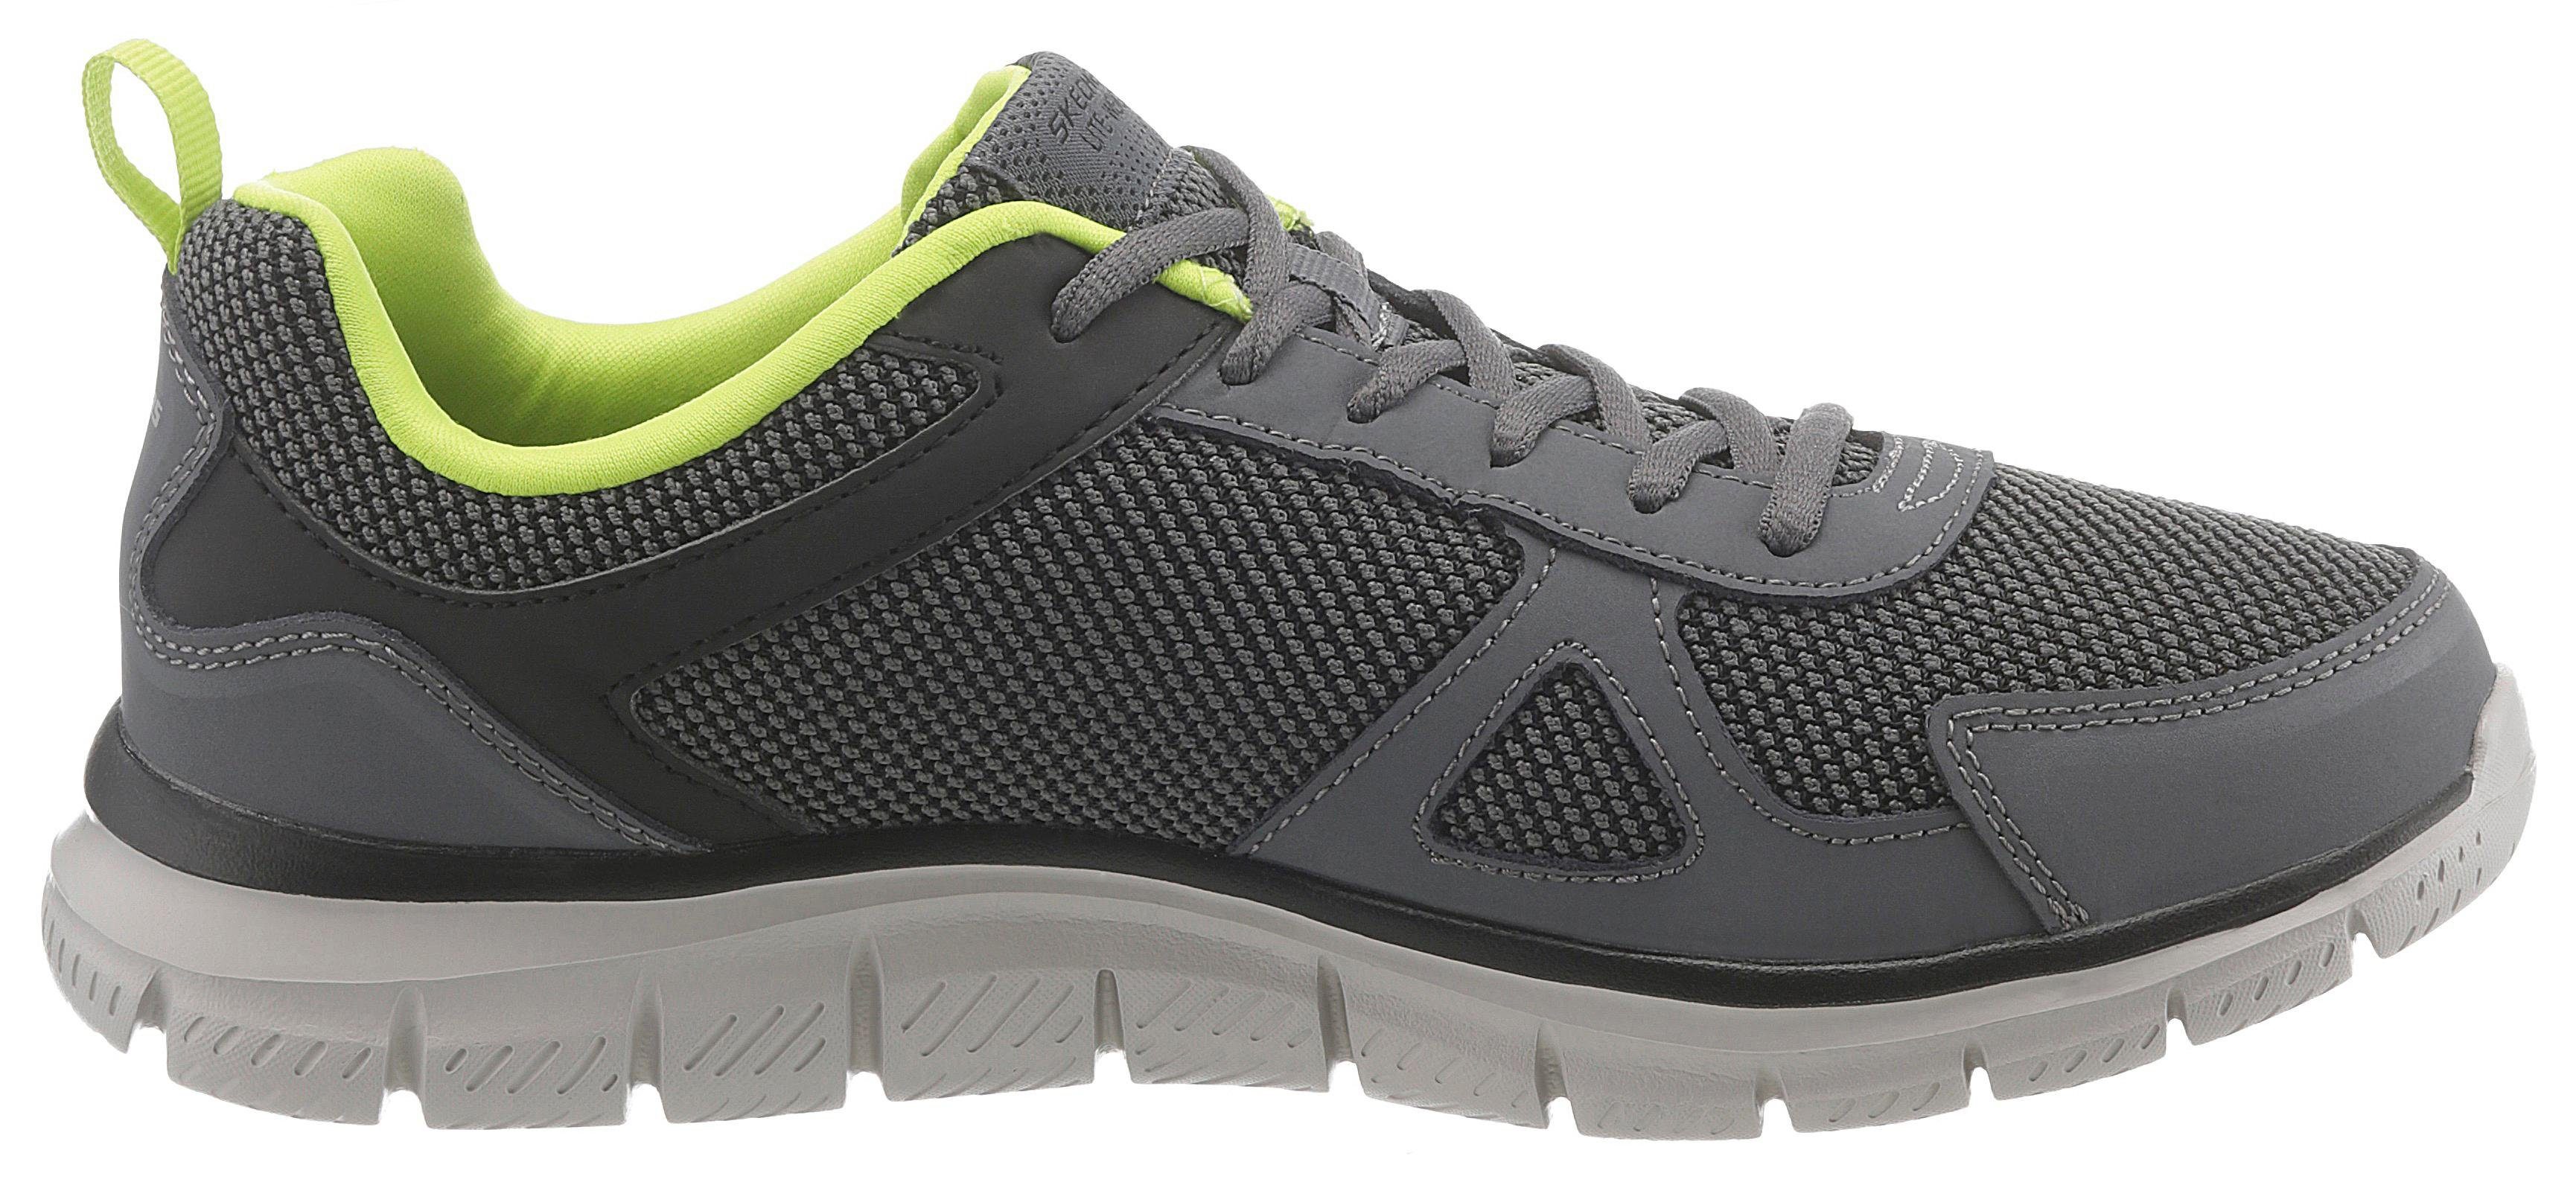 Sneaker CCLM Track - seitlichem Charcoal-Black-Lime Grau-Schwarz-Grün mit Skechers Logo /